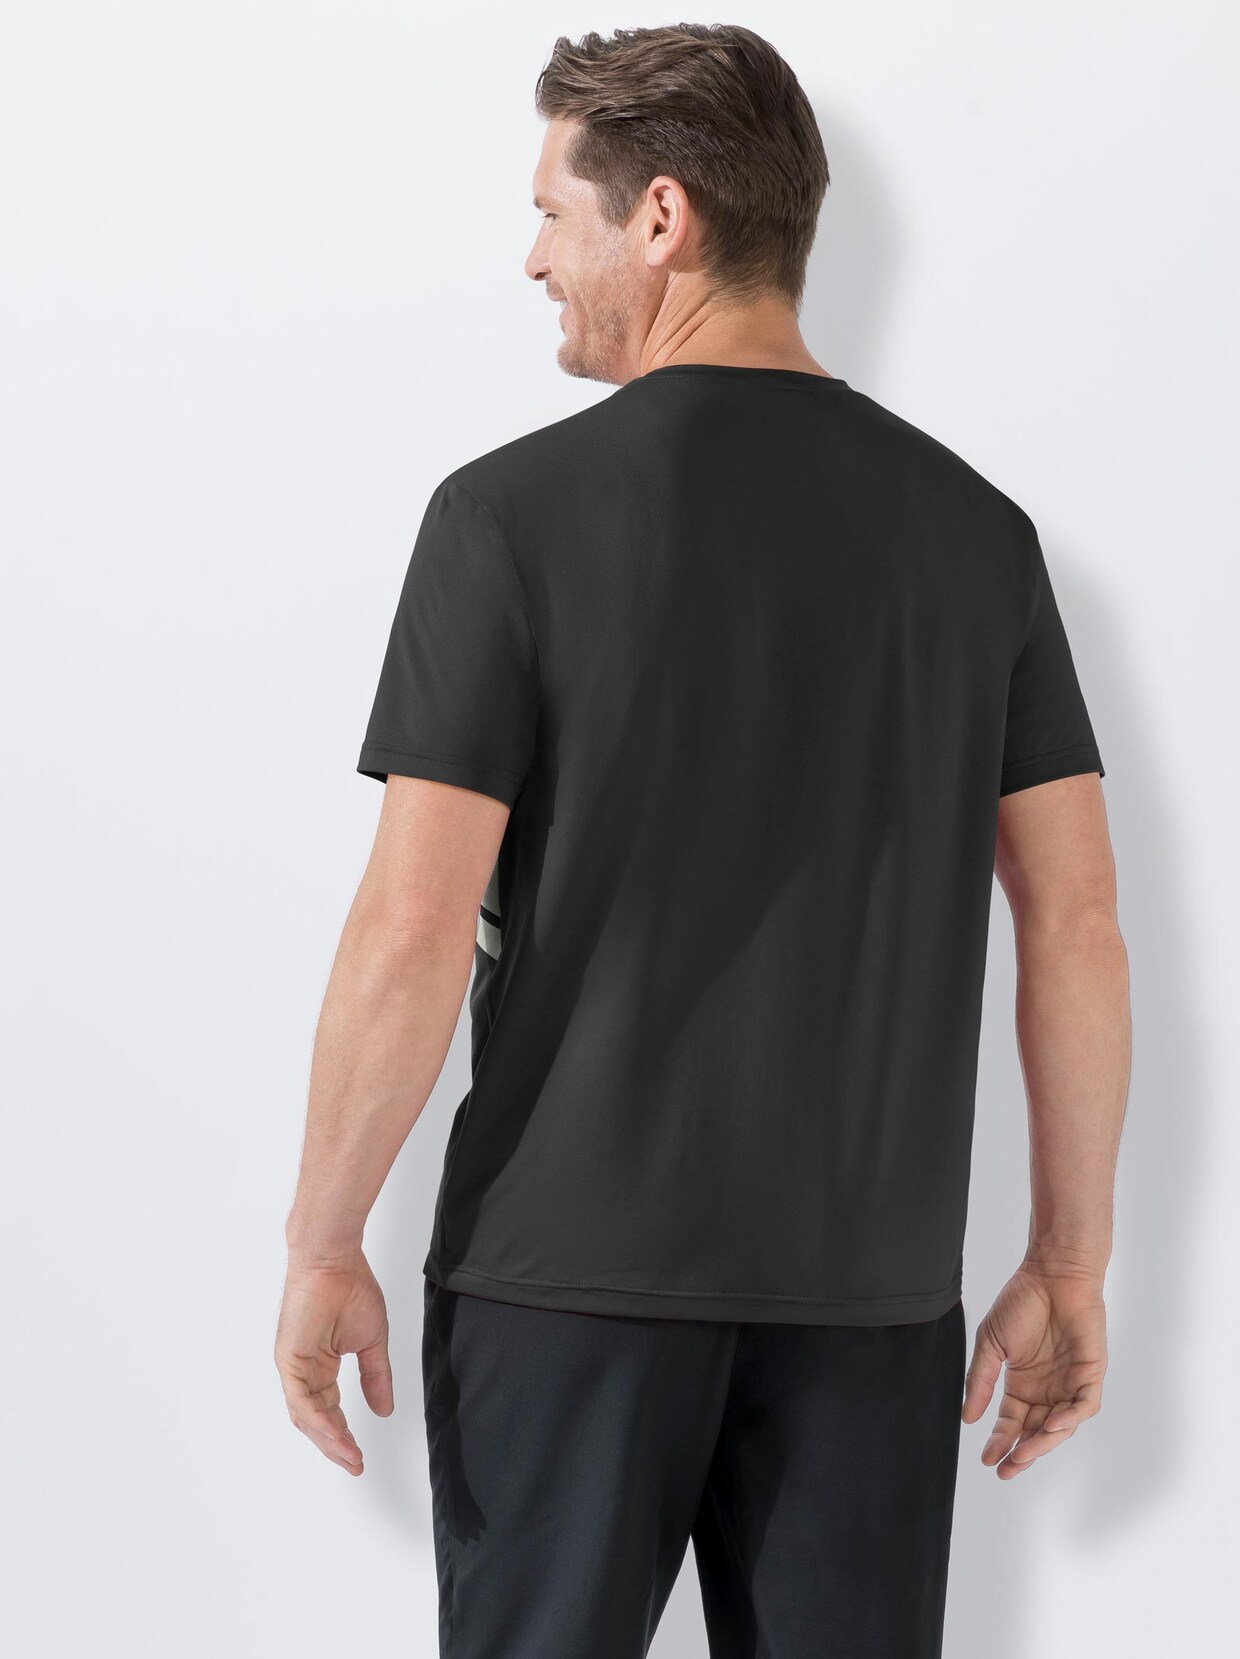 Catamaran Sports Funktions-Shirt - schwarz